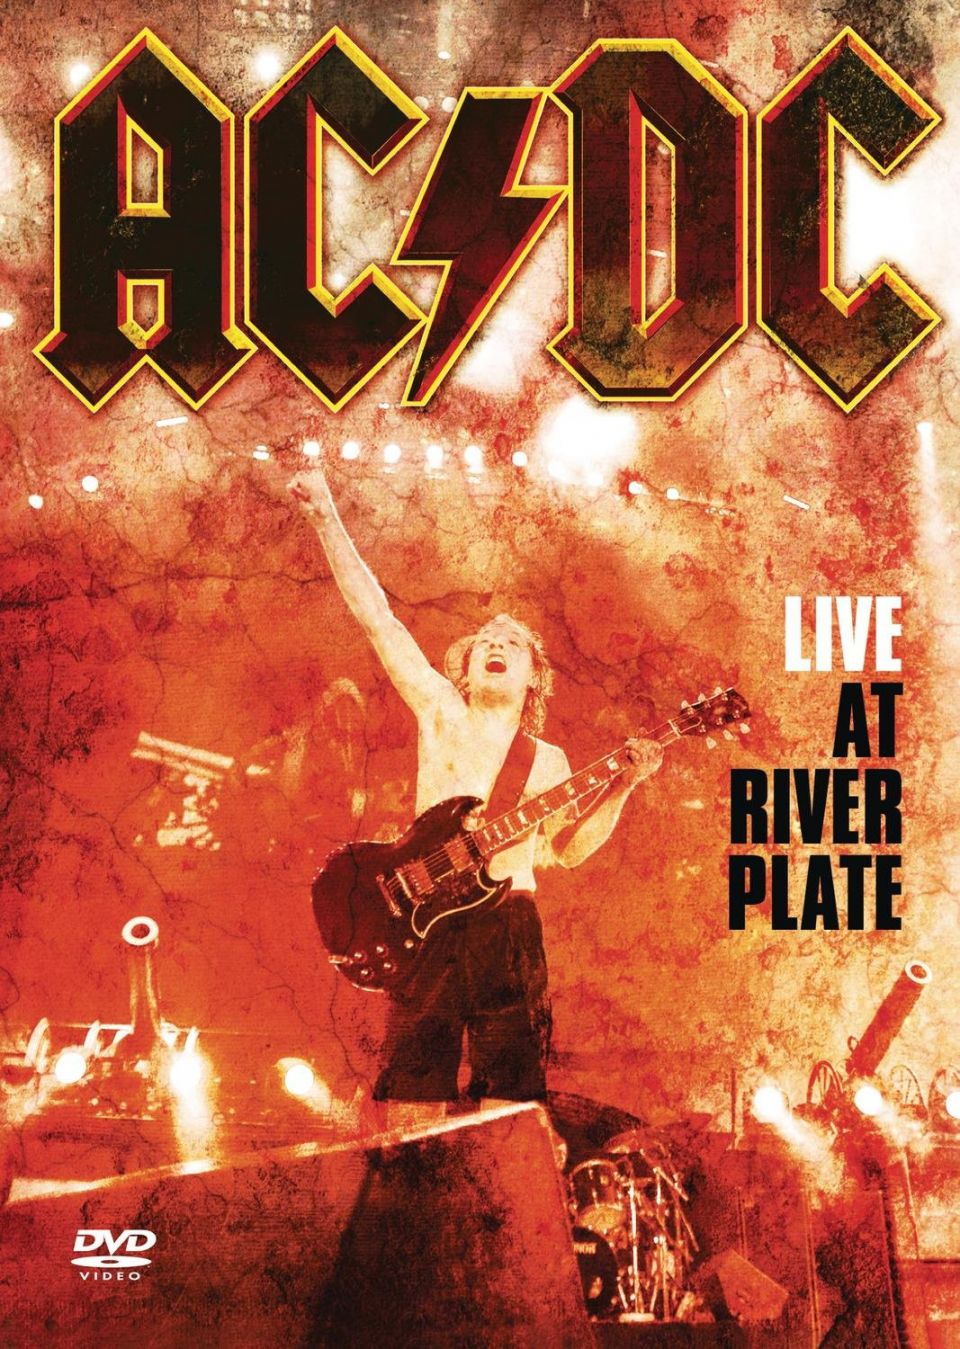 AC/DC | Live At River Plate Amazon link: https://amzn.to/3DQTnr2